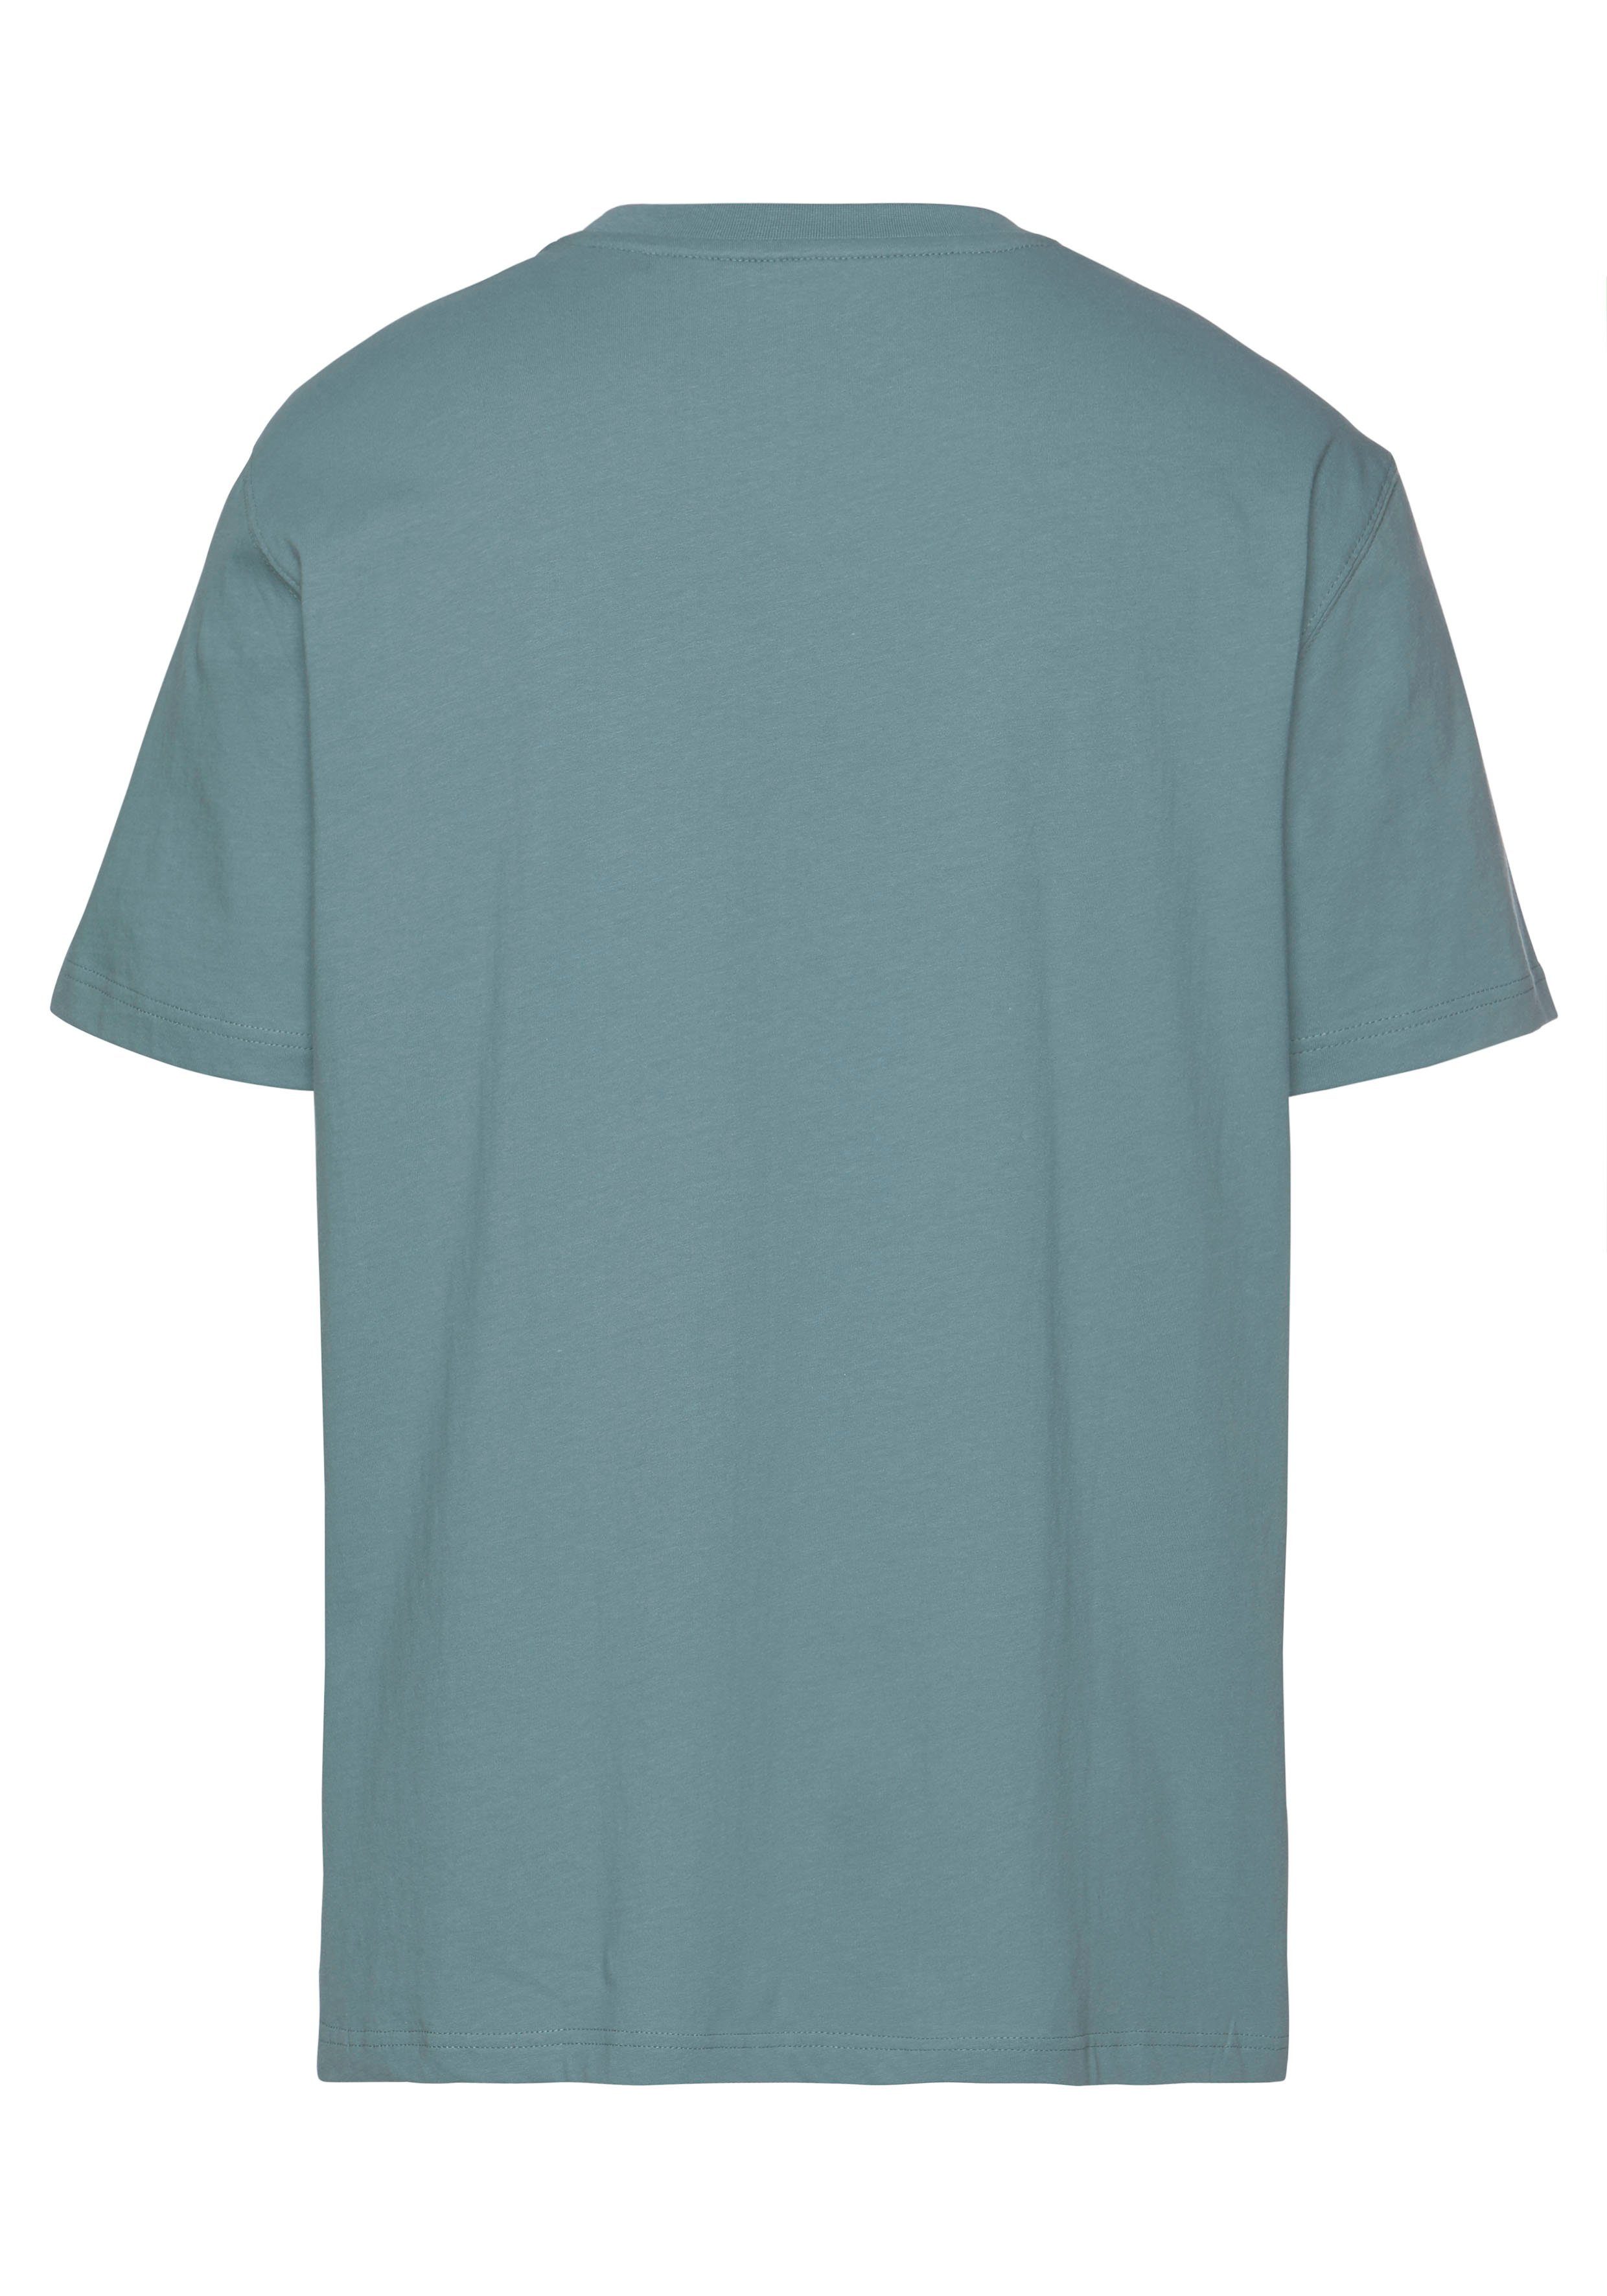 Print Man's mit blau-grau T-Shirt World